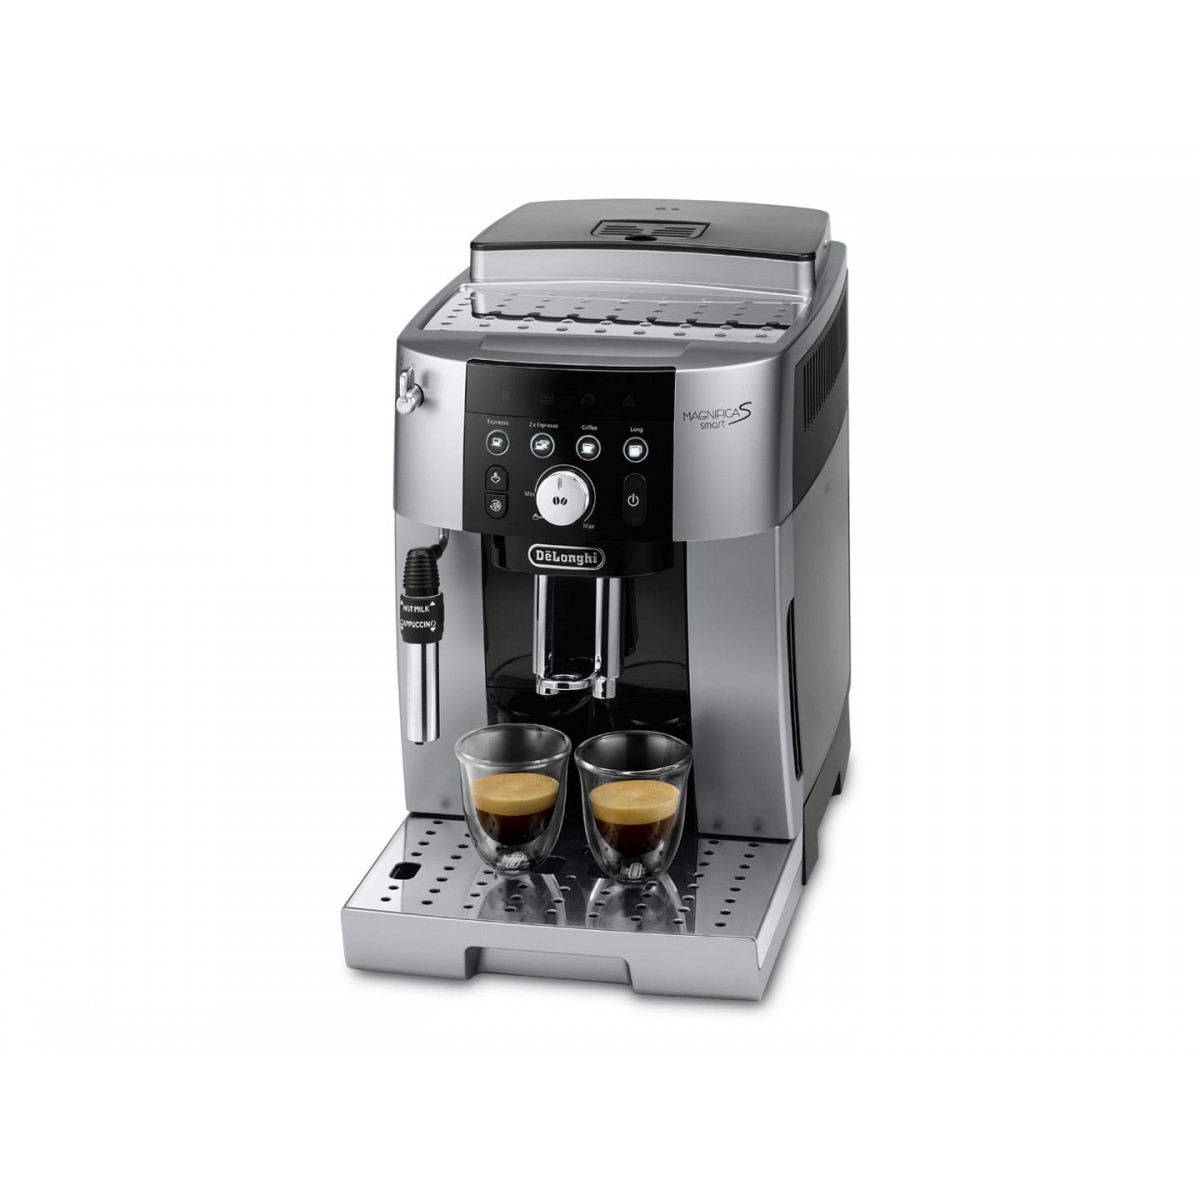 De Longhi Magnifica S Smart - Coffee beans - Built-in grinder - 1450 W - Black - Silver